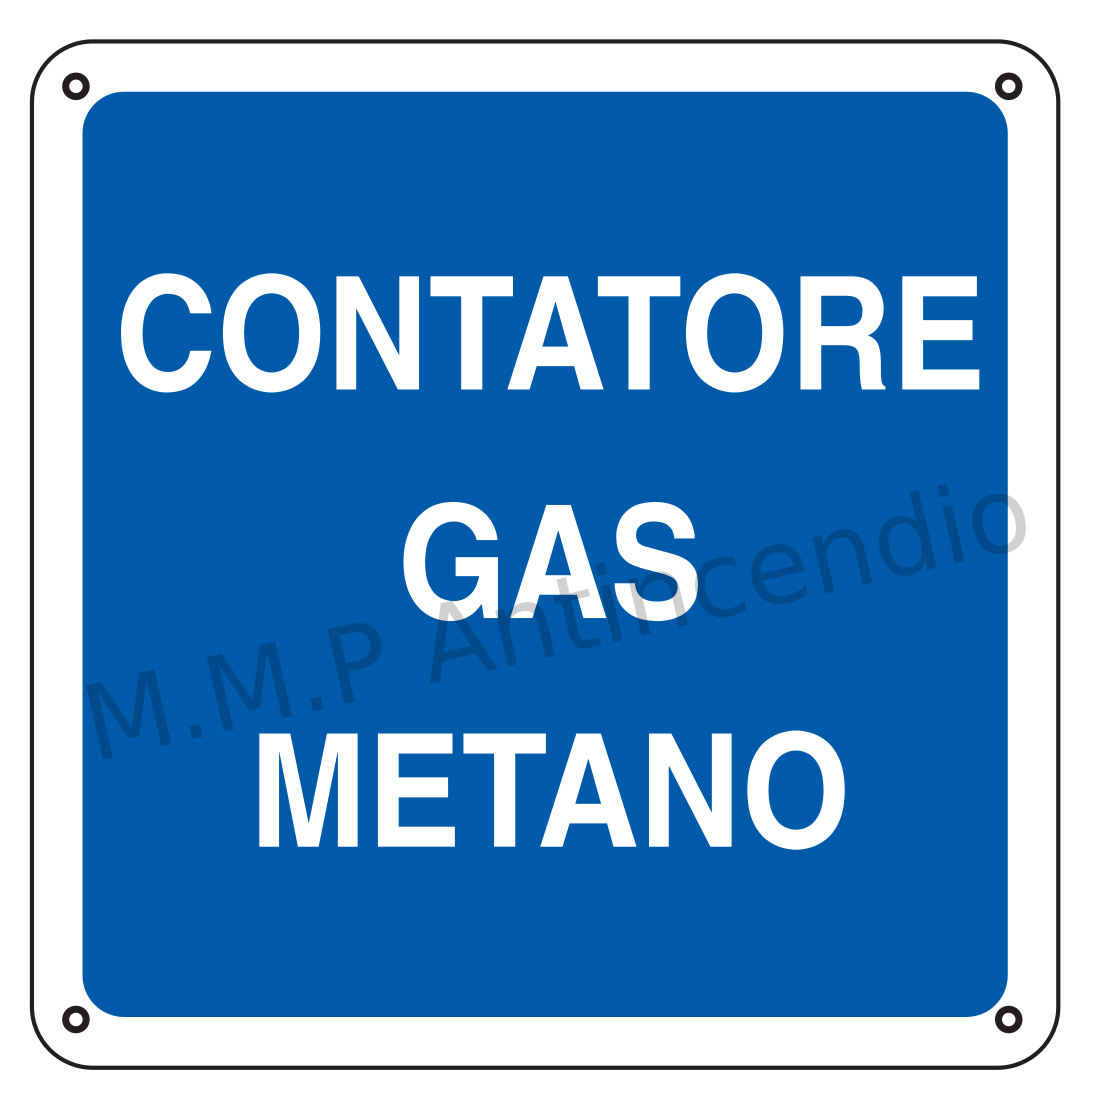 Contatore gas metano